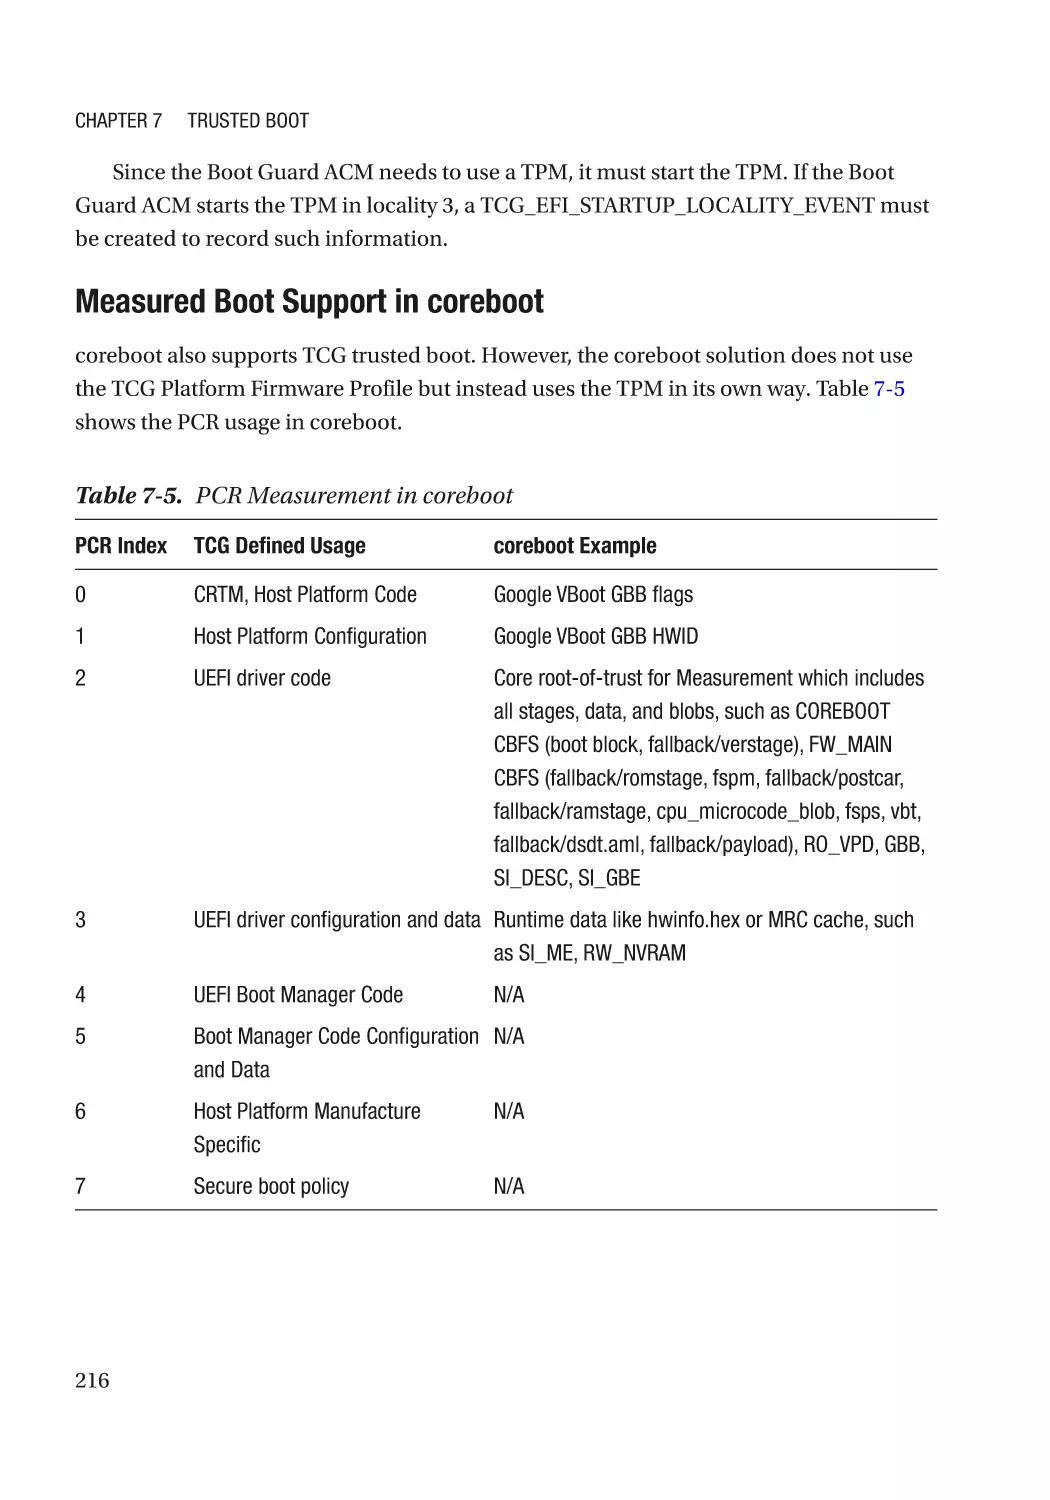 Measured Boot Support in coreboot